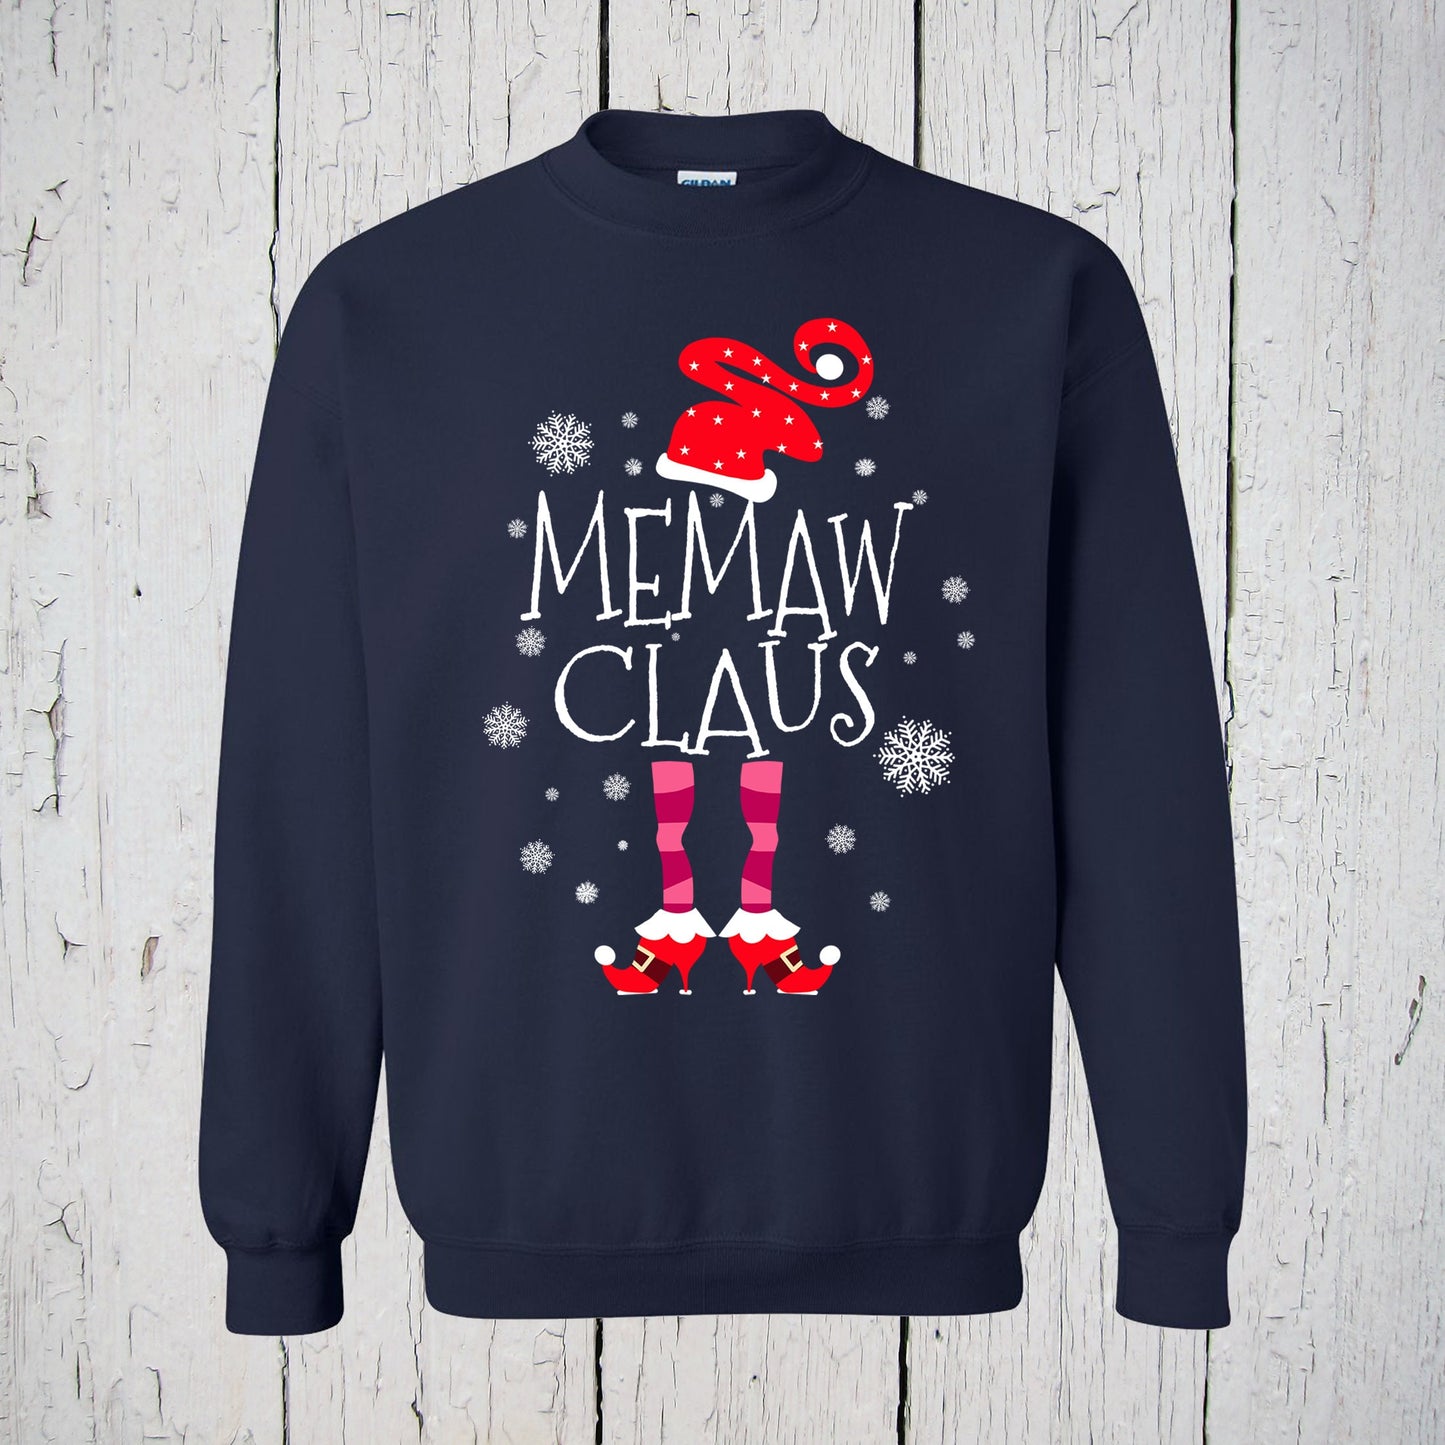 Memaw Claus Sweatshirt, Memaw Shirts, Santa Claus Suit, Christmas Shirt, Memaw Gifts, Memaw Shirt, Personalized Shirt, Funny Christmas Shirt